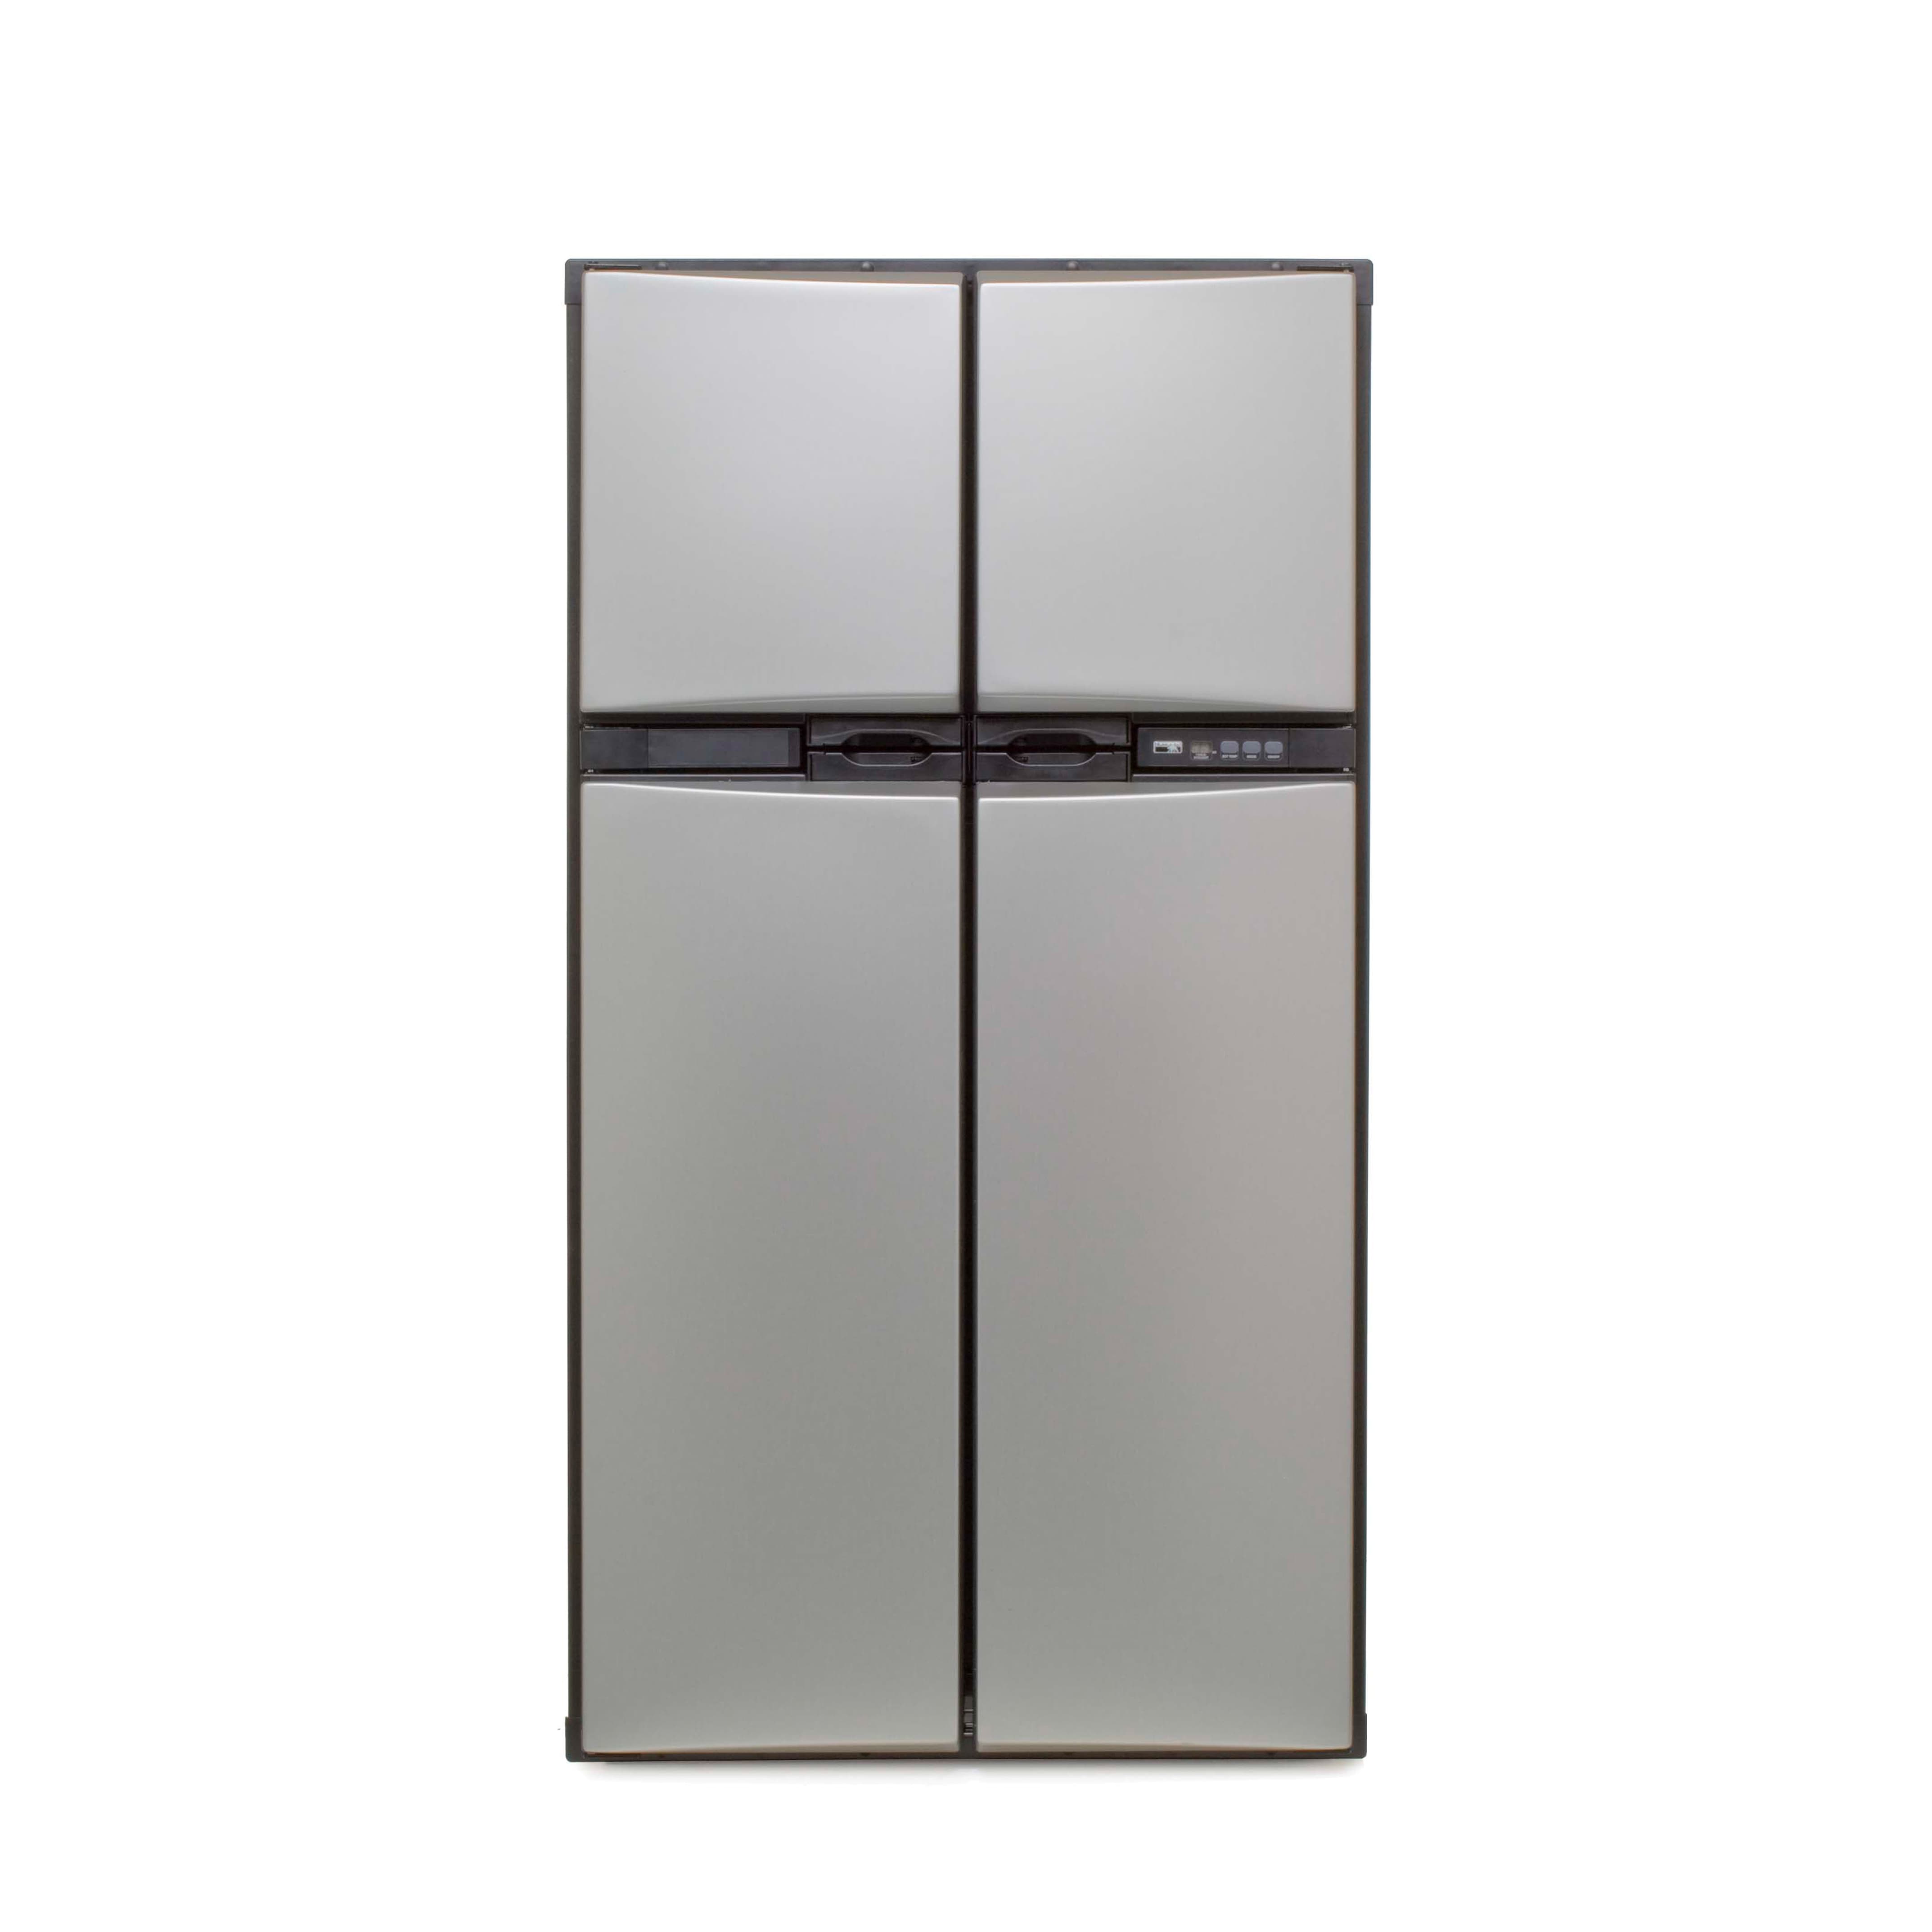 1210 Ultraline RV refrigerator - 12 cubic feet of storage encased in ...